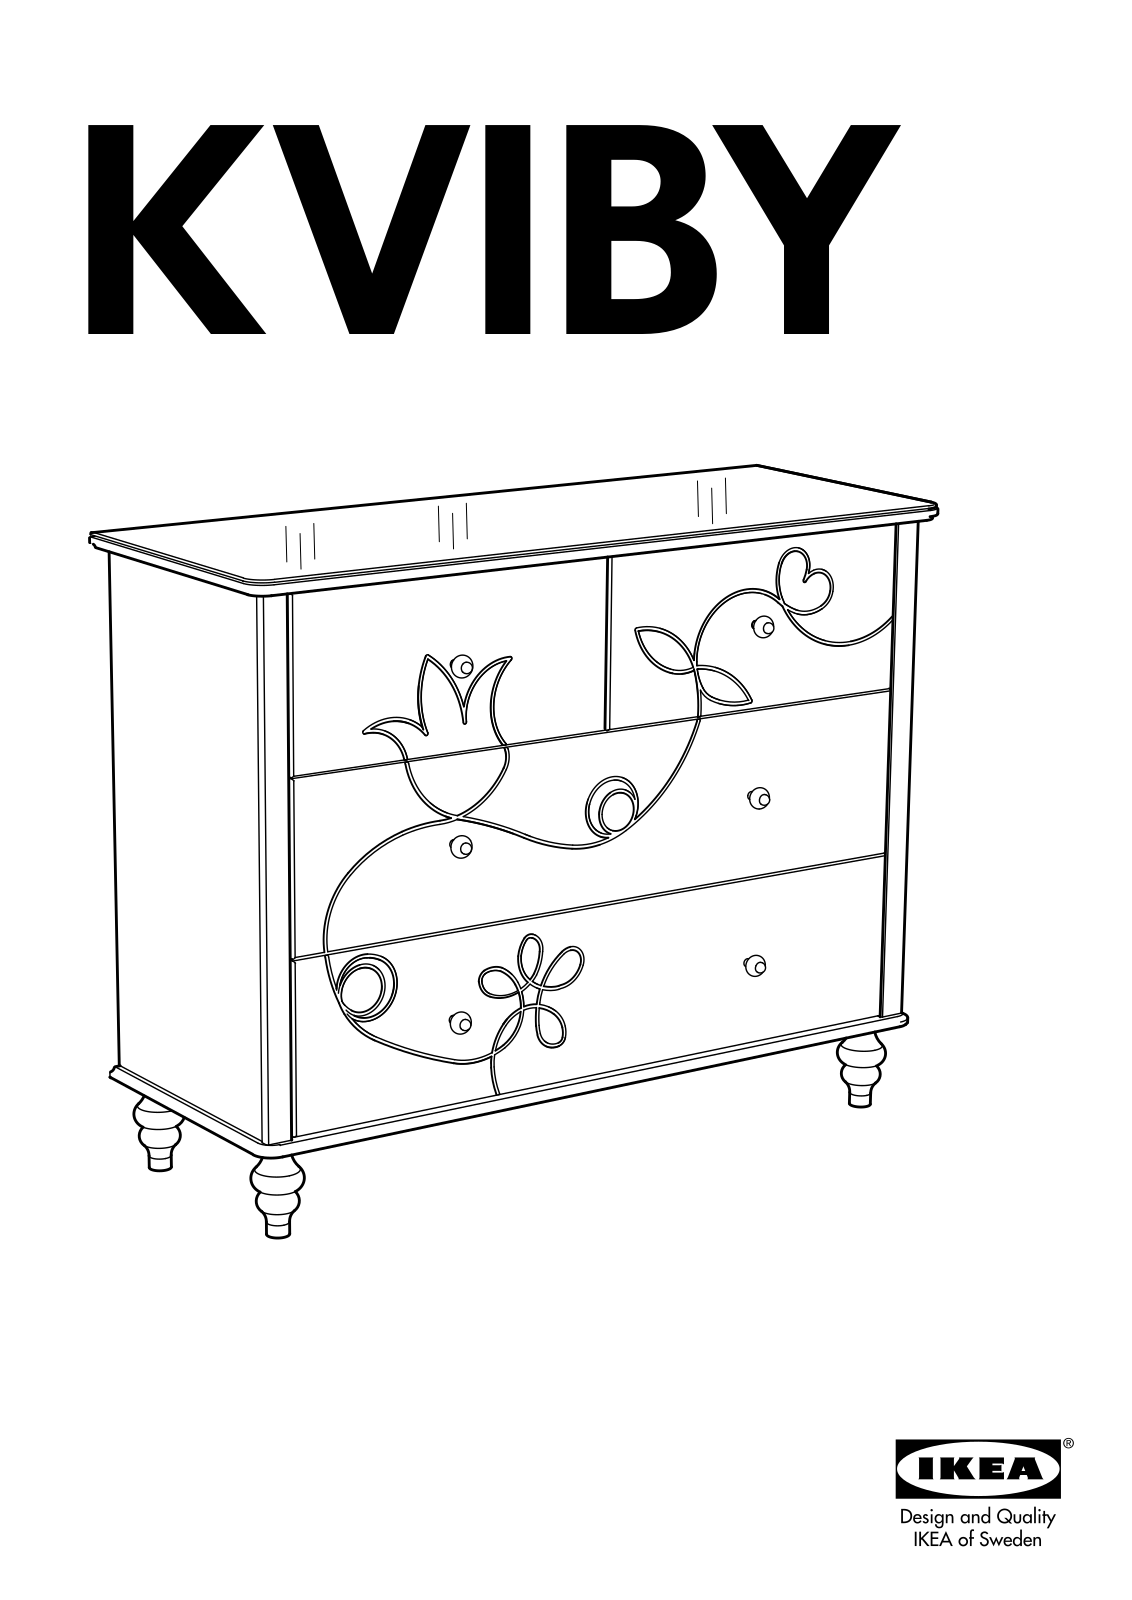 IKEA KVIBY User Manual